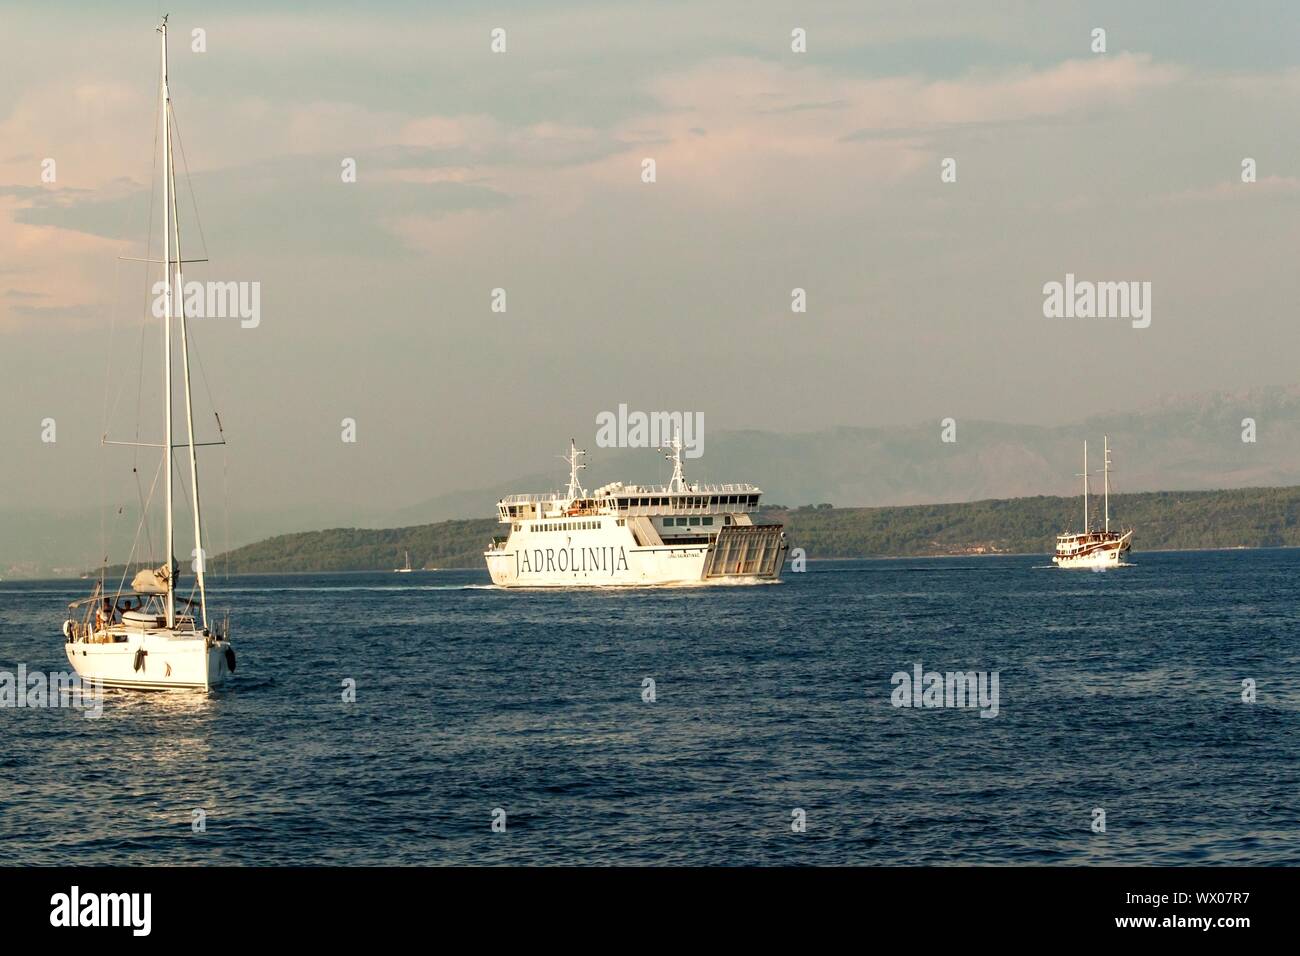 Page 2 - Ferry Jadrolinija Port Split Croatia High Resolution Stock  Photography and Images - Alamy